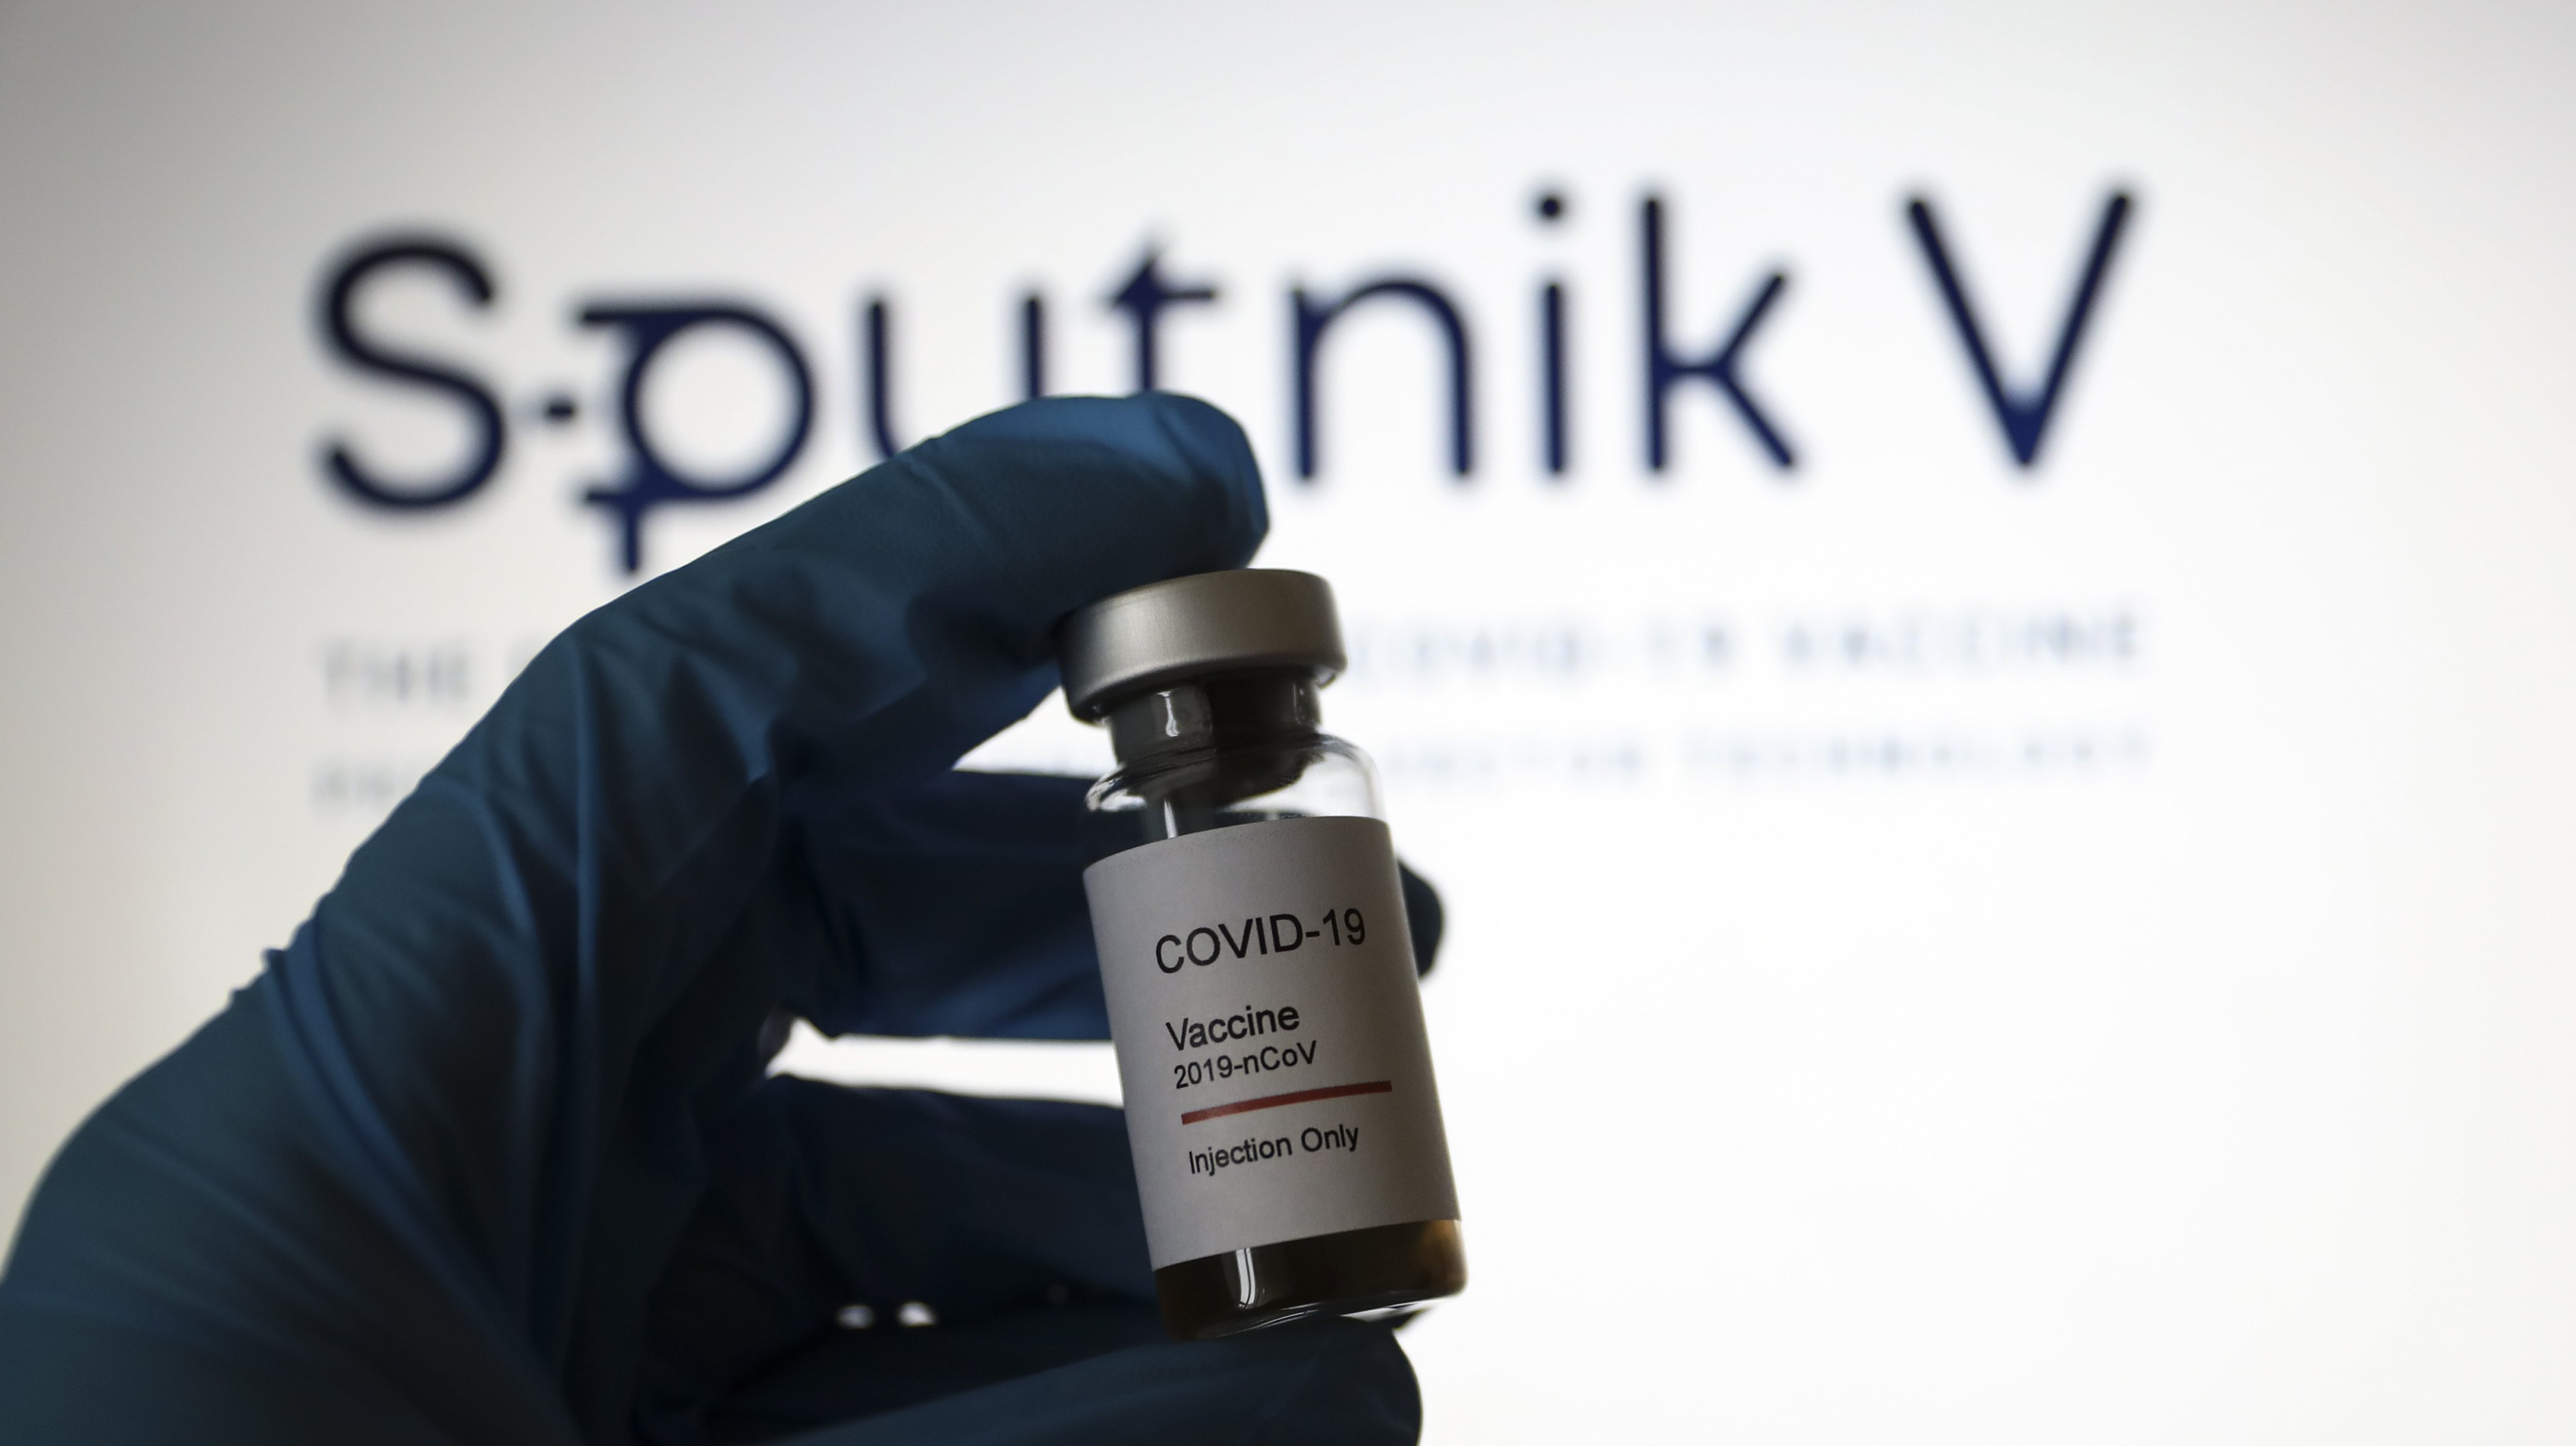 Companies working on COVID-19 vaccines